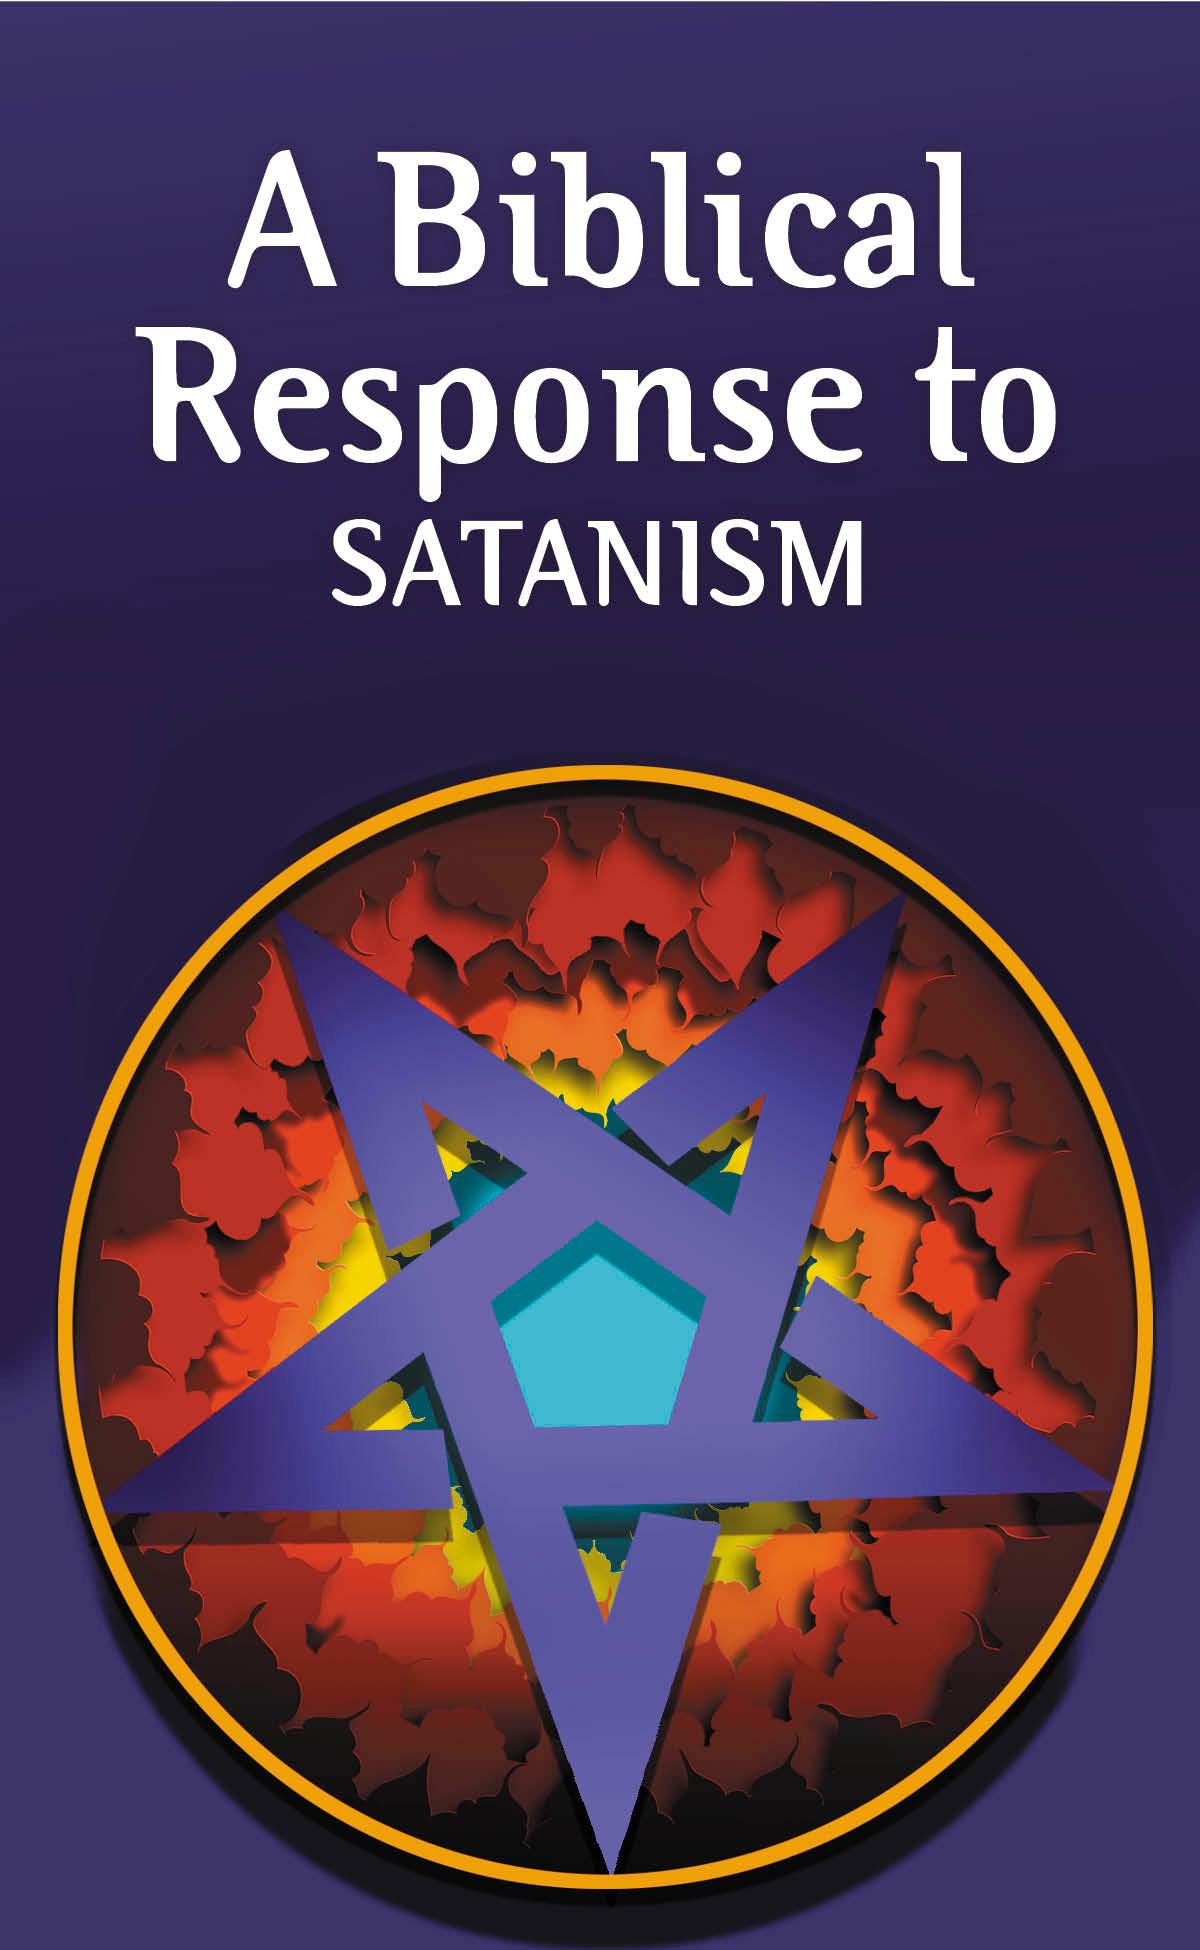 A Biblical Response to Satanism